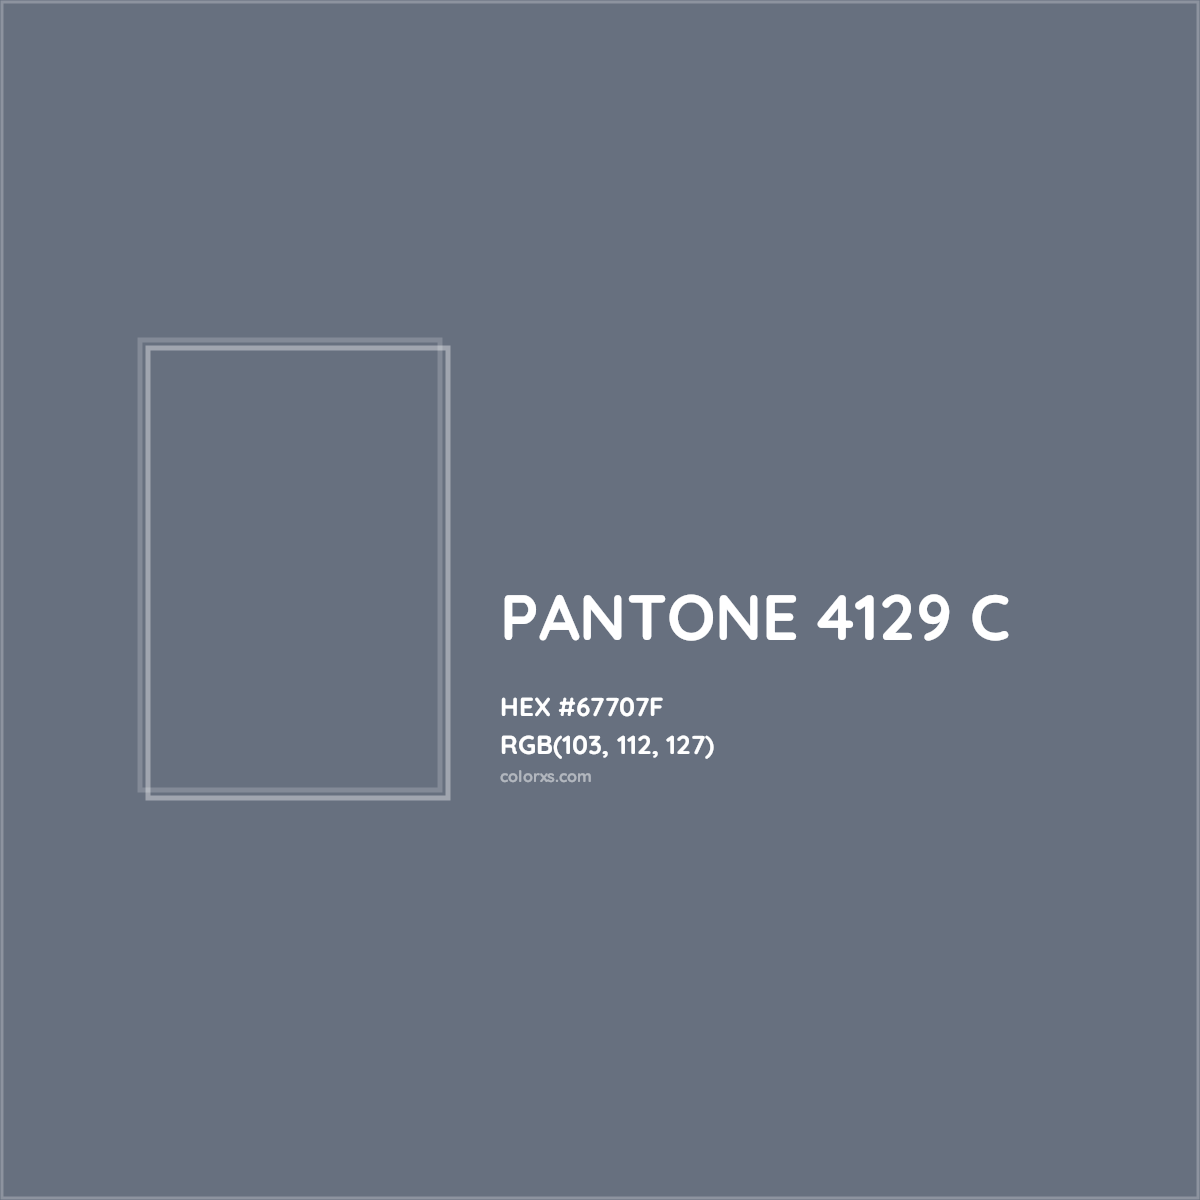 HEX #67707F PANTONE 4129 C CMS Pantone PMS - Color Code